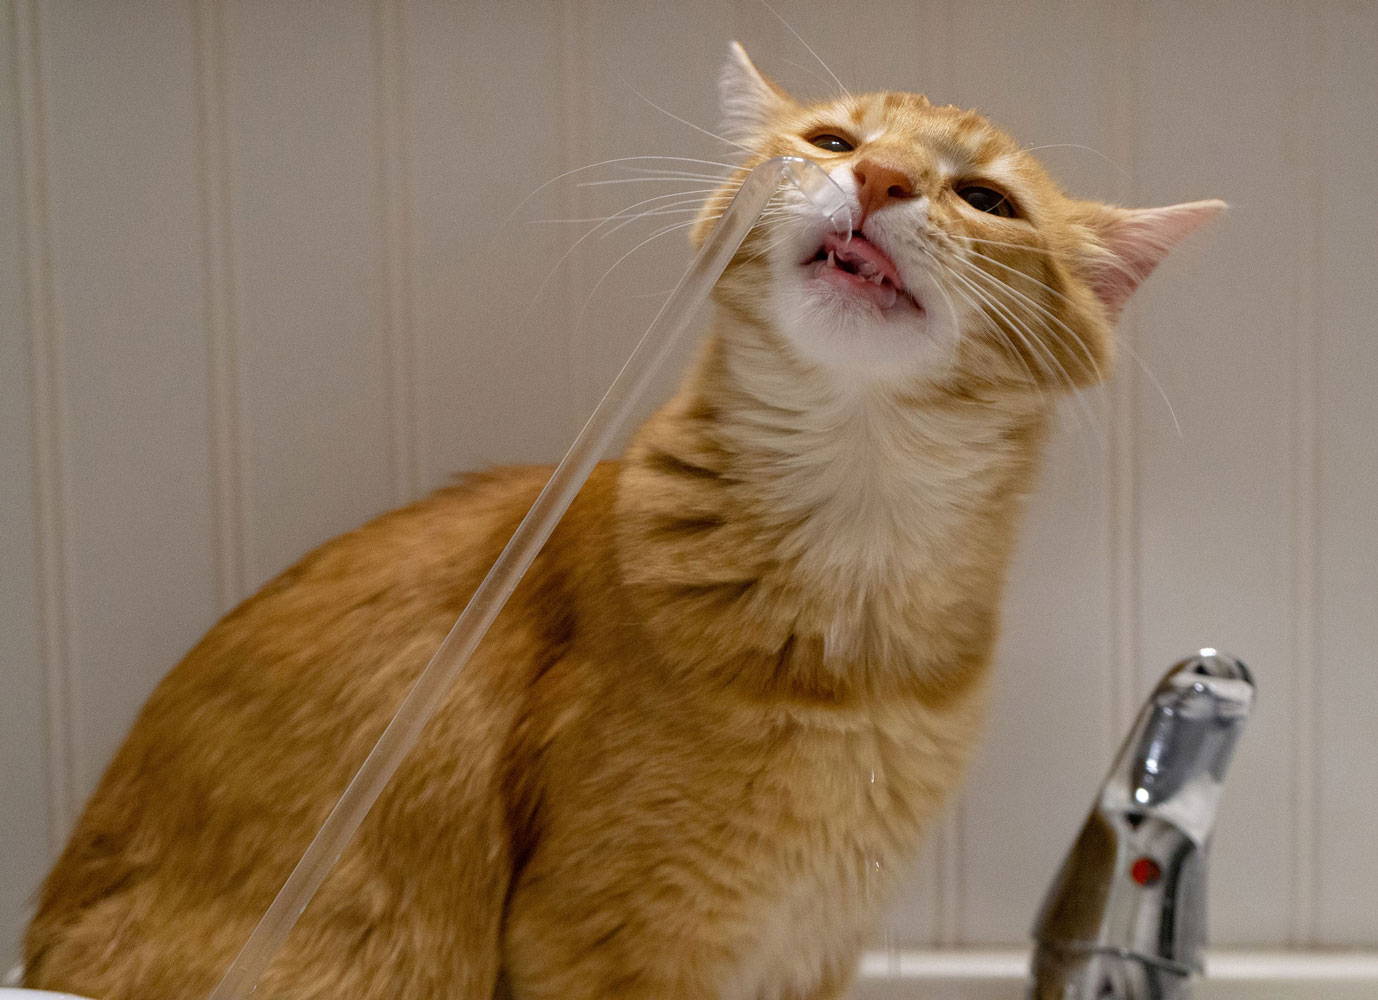 Closeup of cat drinking from AquaPurr spigot at sink